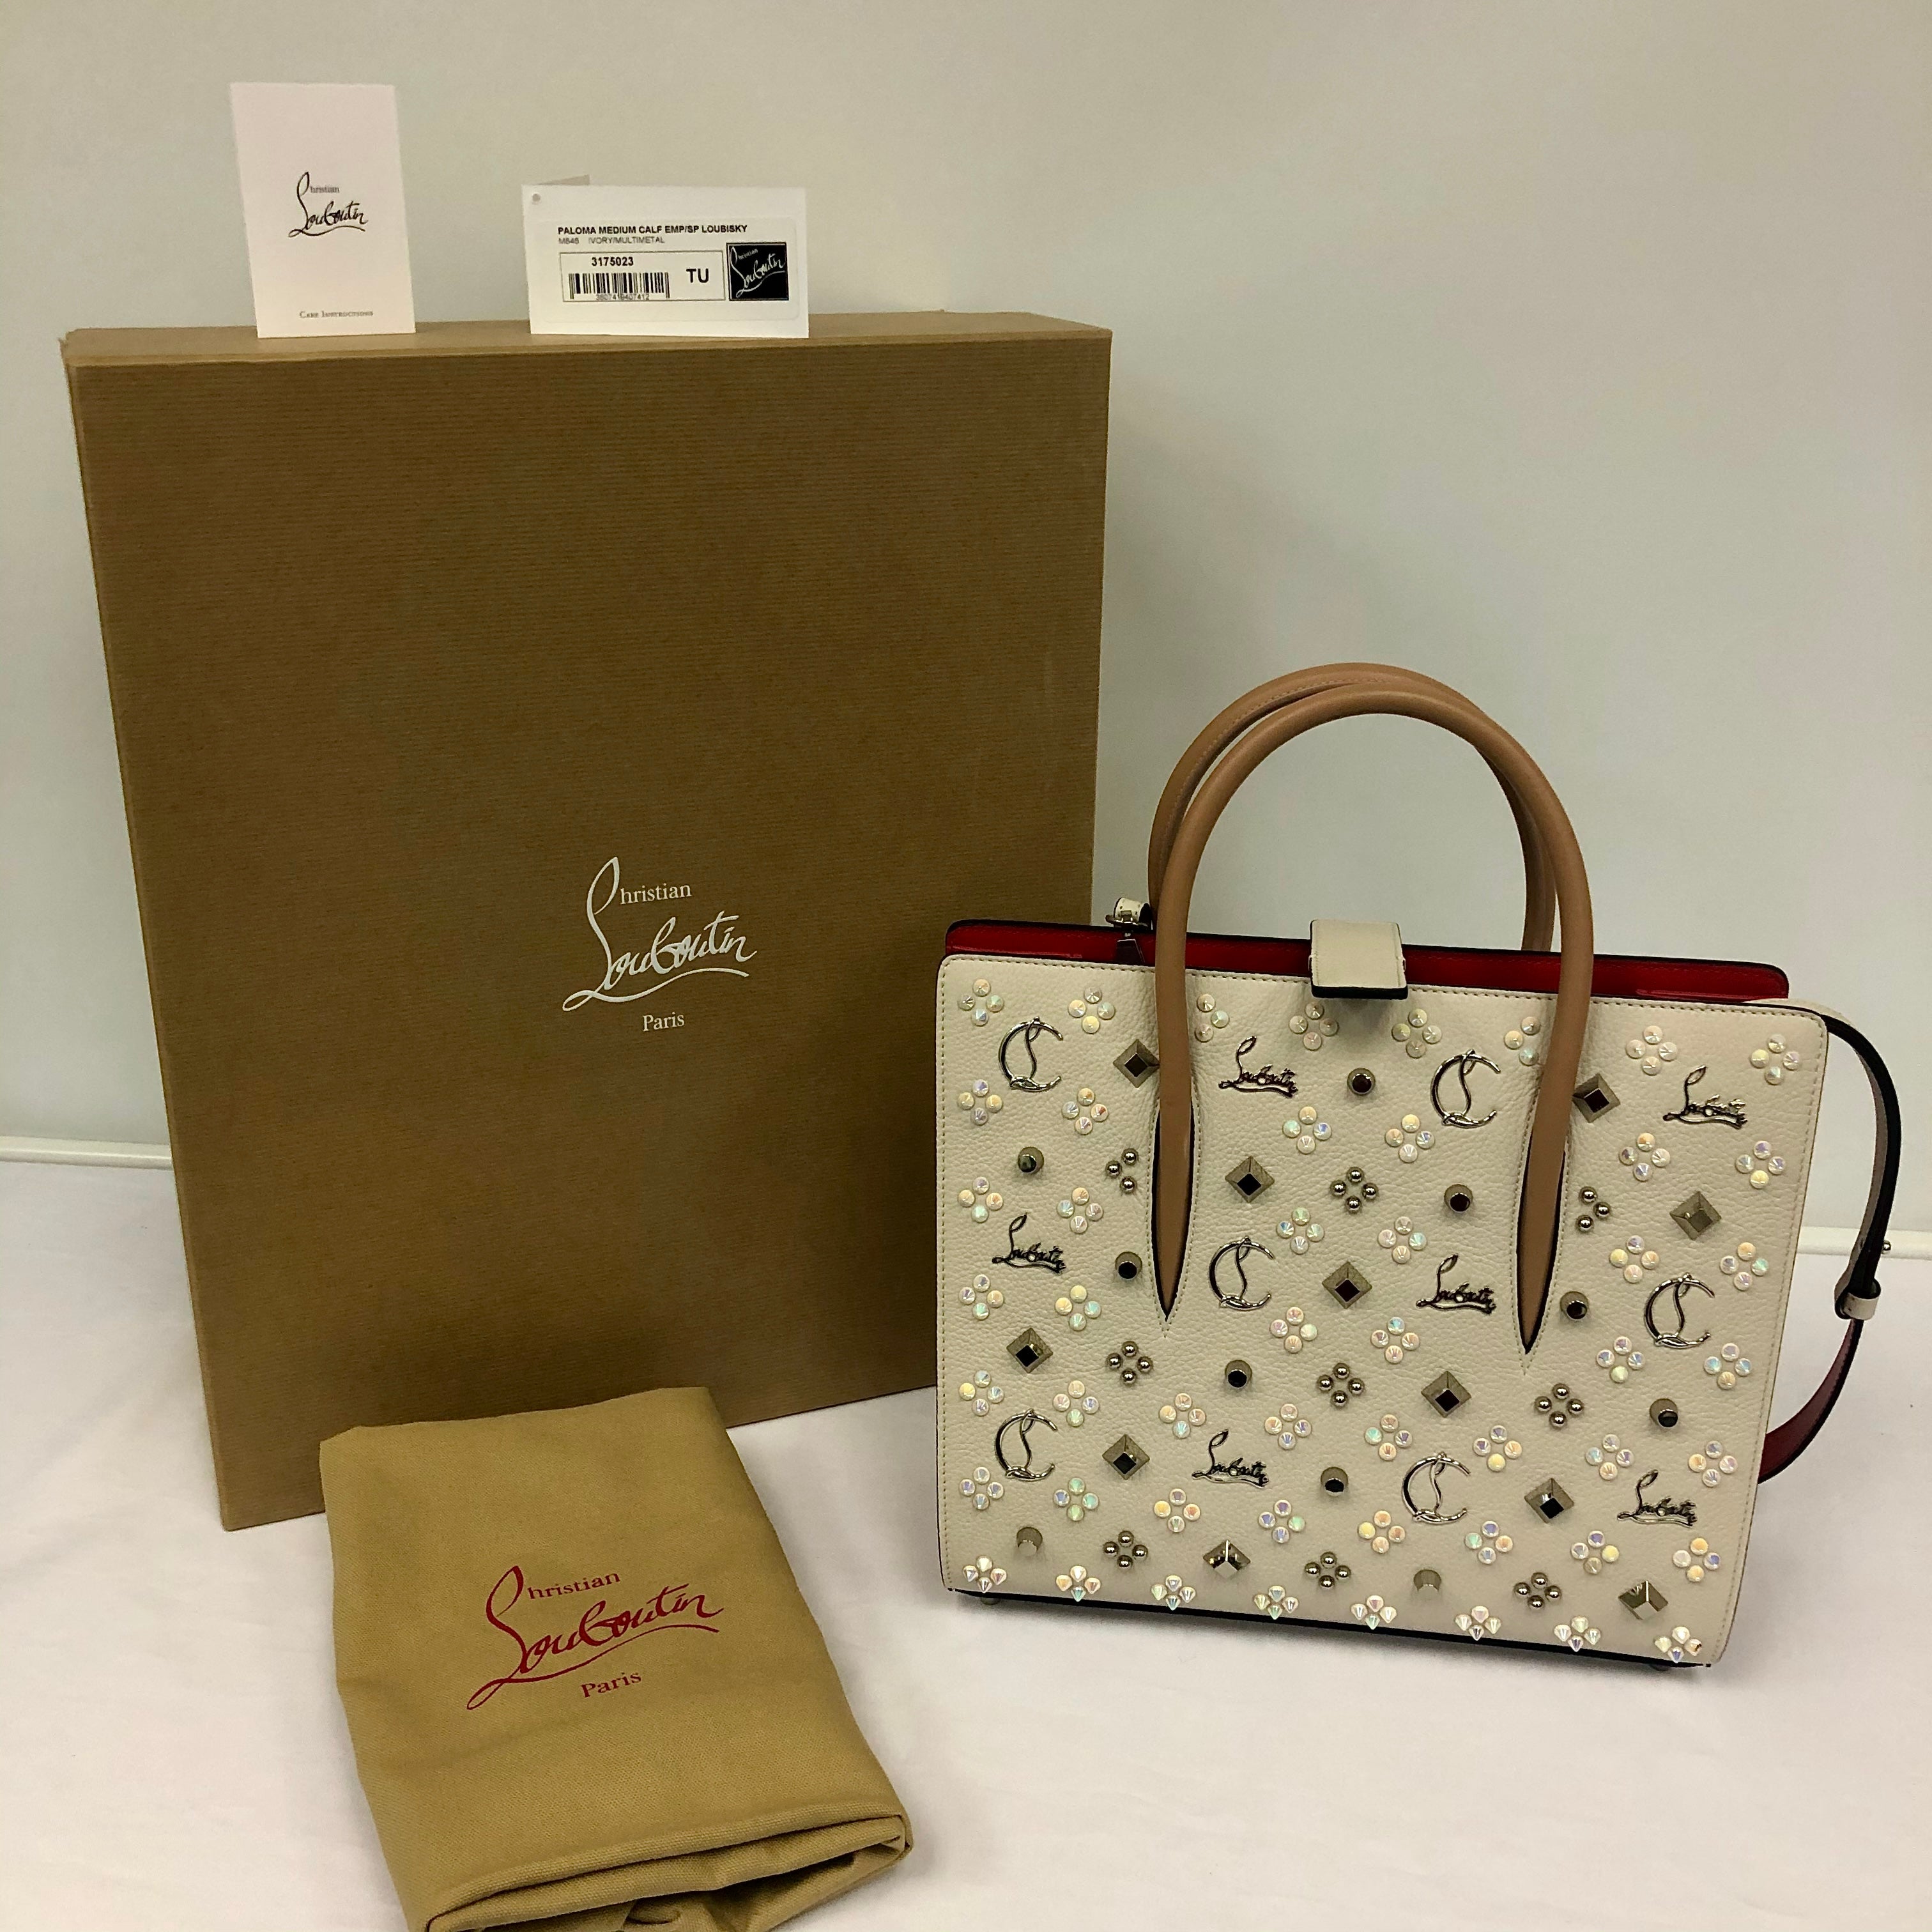 Christian Louboutin Pearl White Handbag with Studs